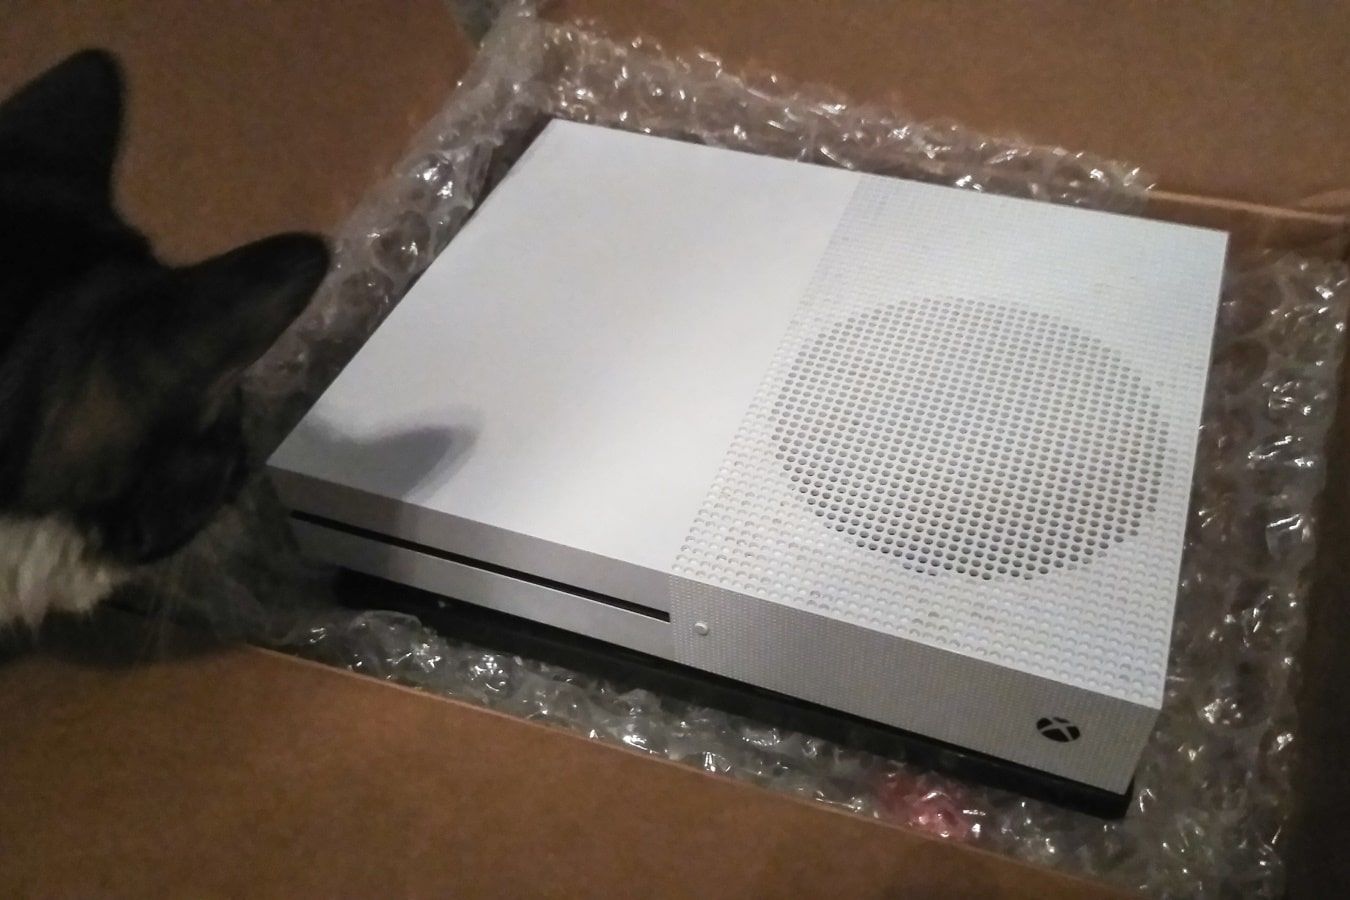 Custom modded Xbox One A PC